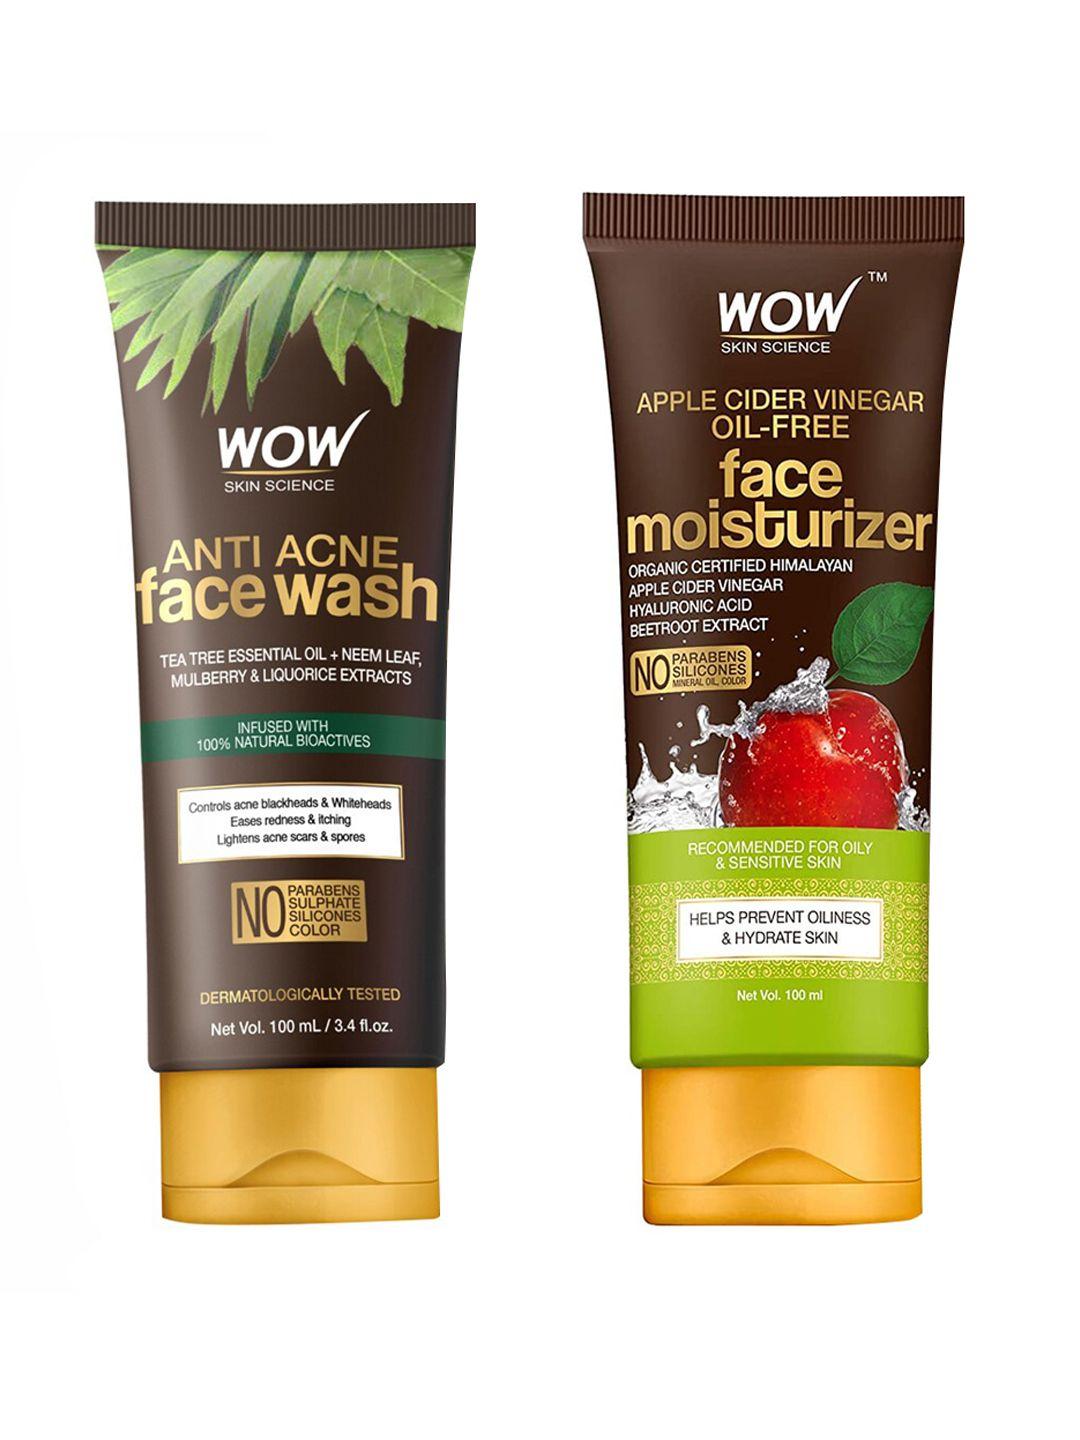 wow skin science unisex set of face wash & moisturizer